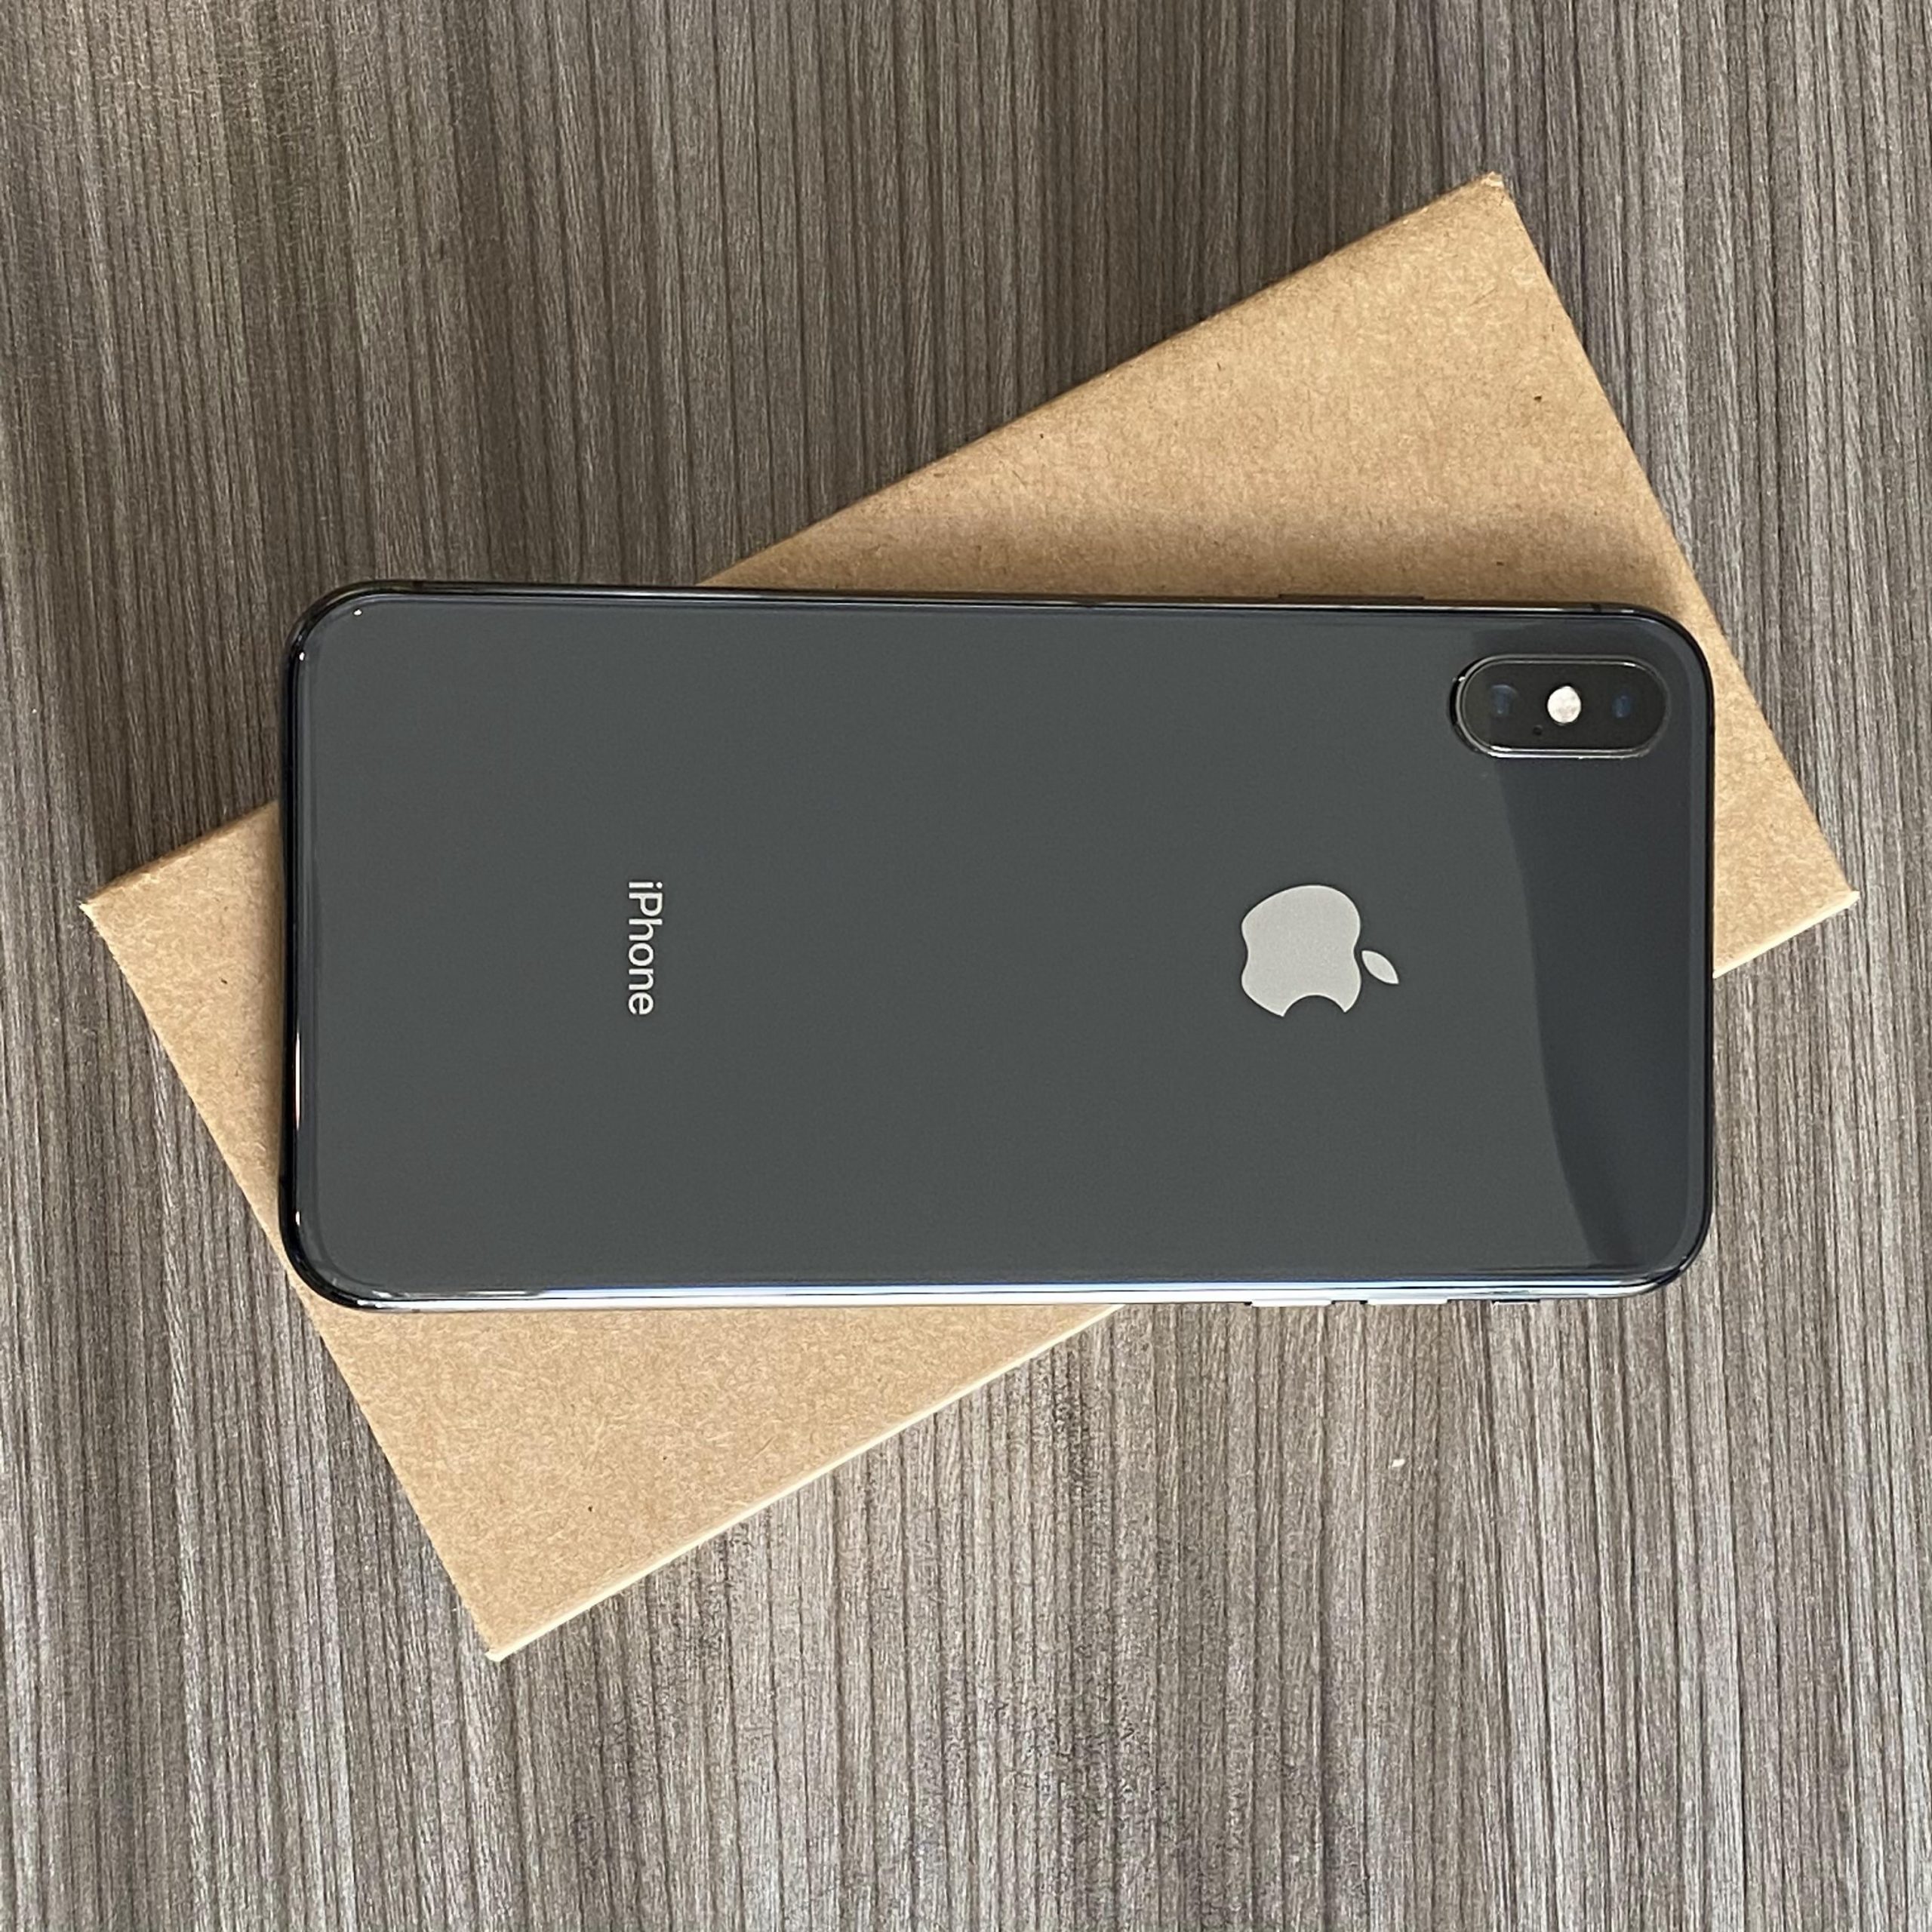 iPhone SE (2020) 64GB Black ( Refurbished )  Mobile City